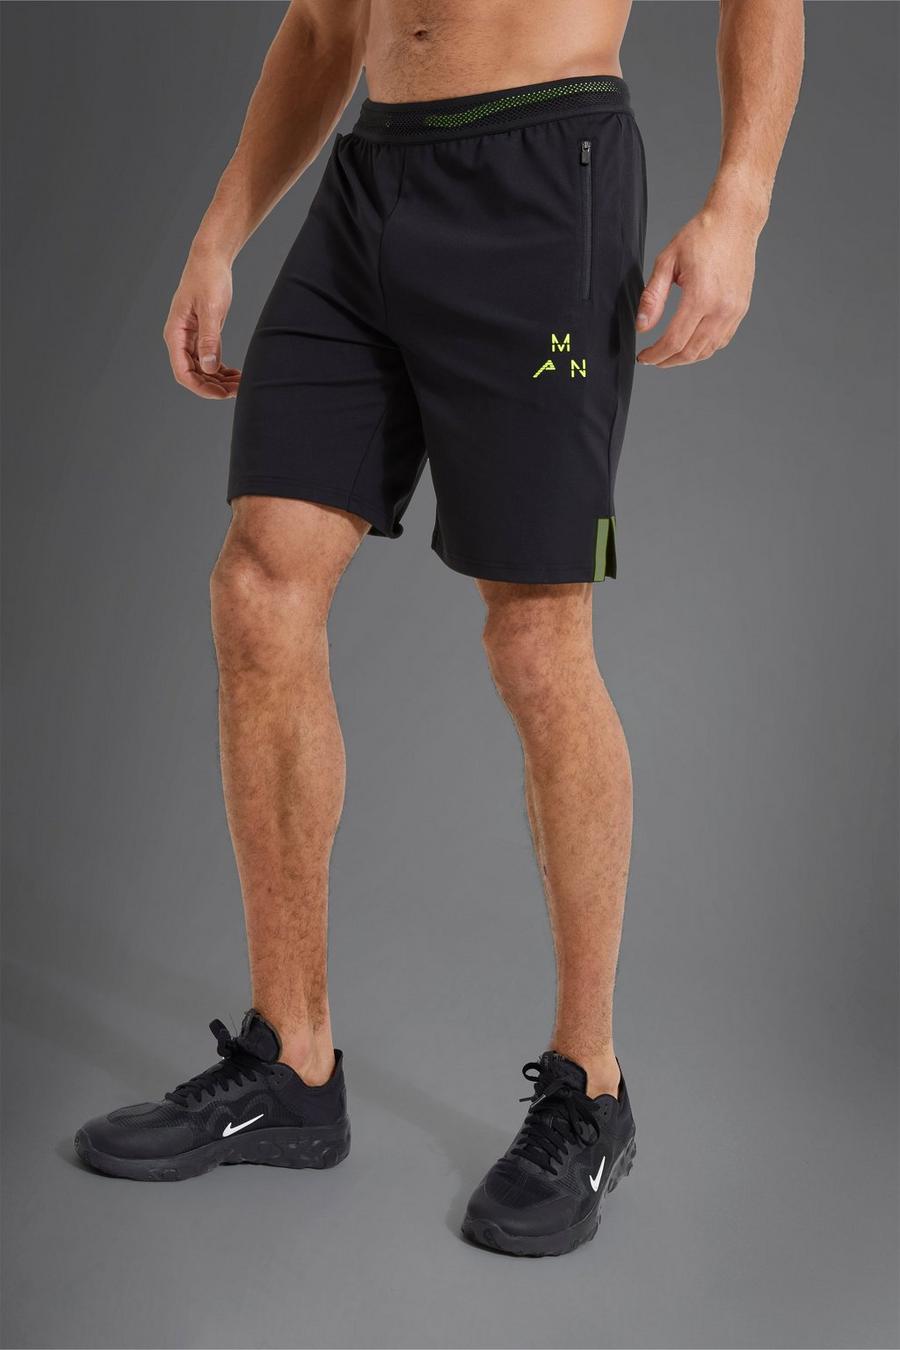 Black negro Man Active Gym Neon Detail Shorts